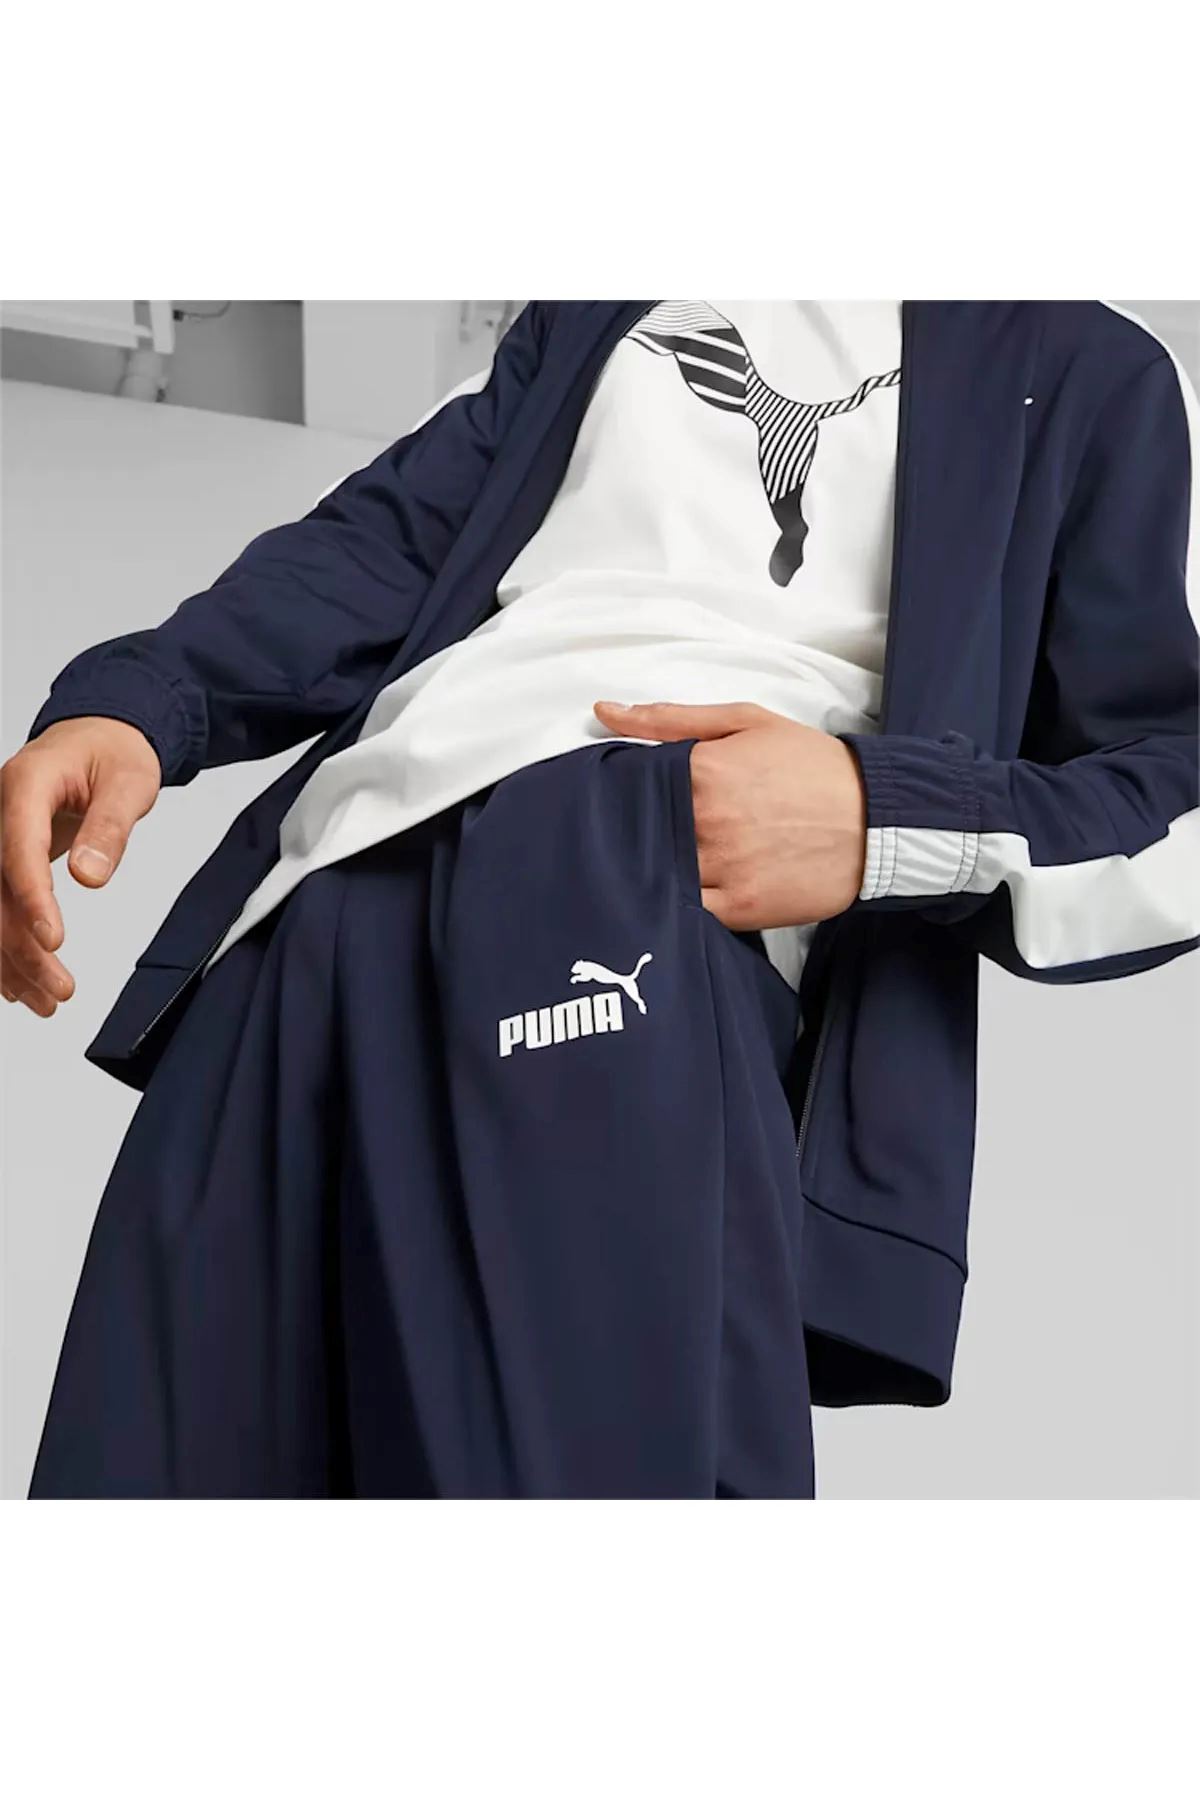 Puma Baseball Tricot Suit Erkek Lacivert Eşofman Takımı - 677428-06